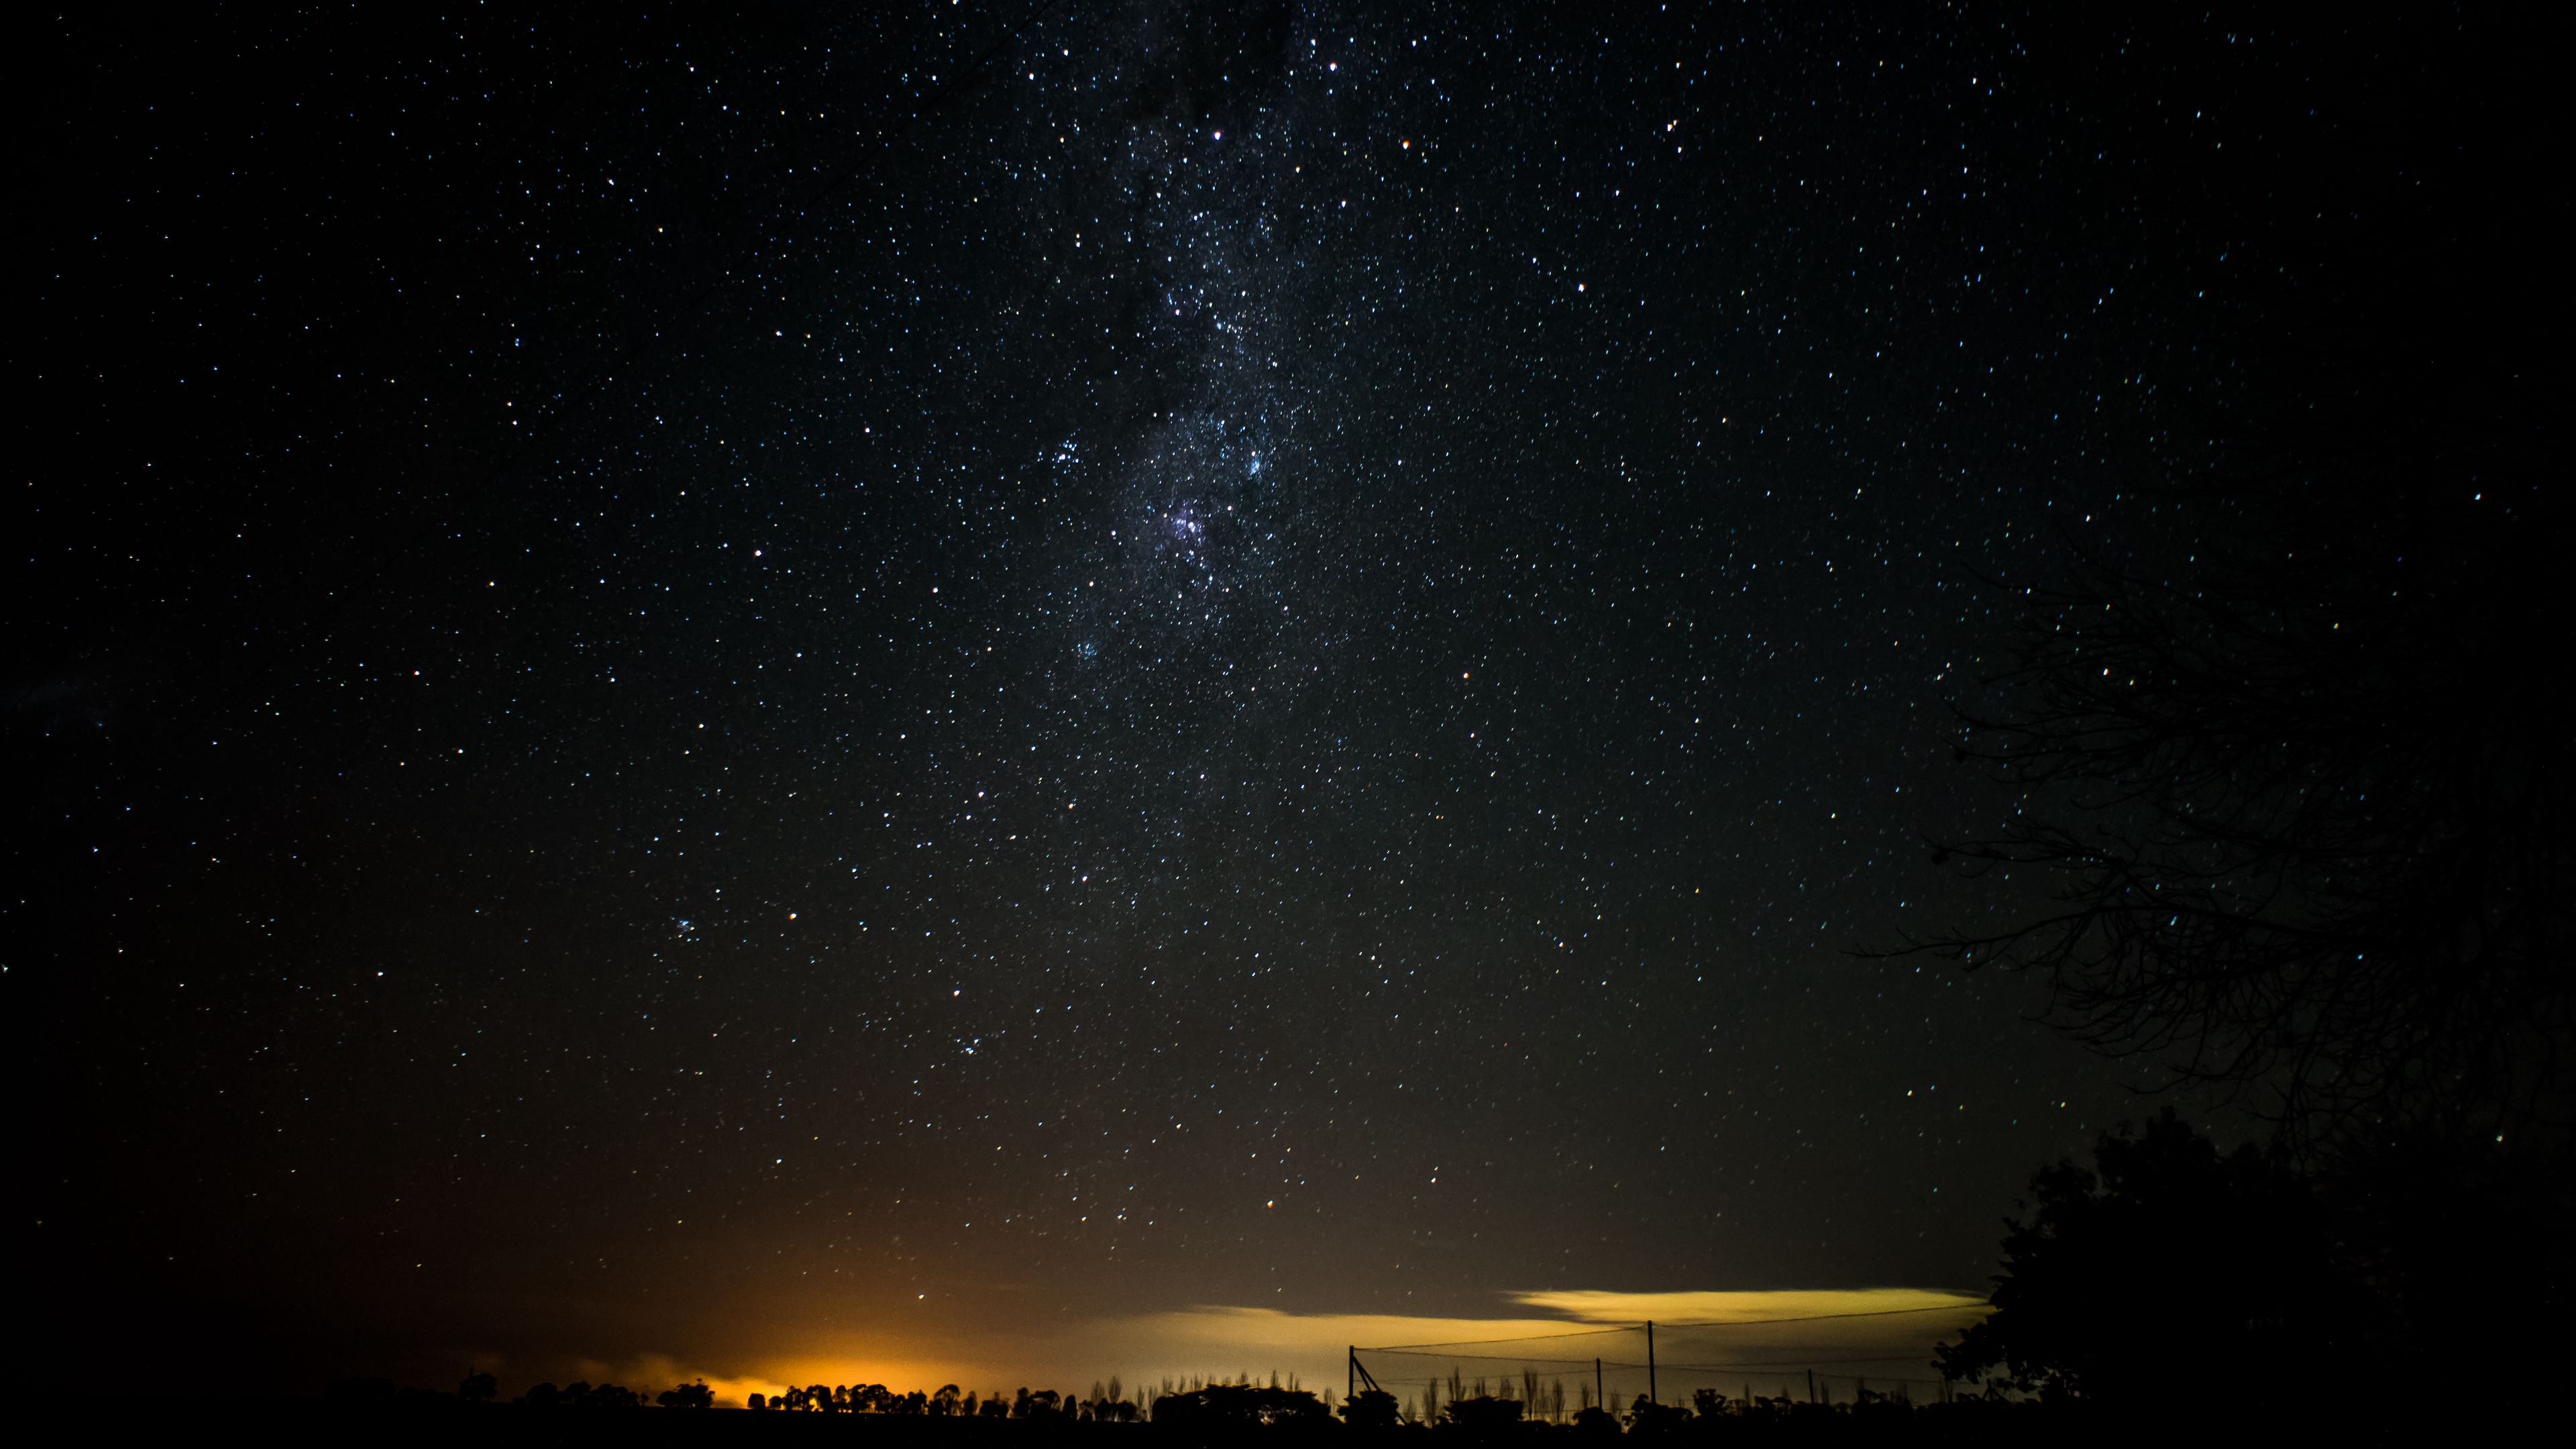 Download wallpaper 3840x2160 starry sky, night, horizon, shine, night  landscape 4k uhd 16:9 hd background